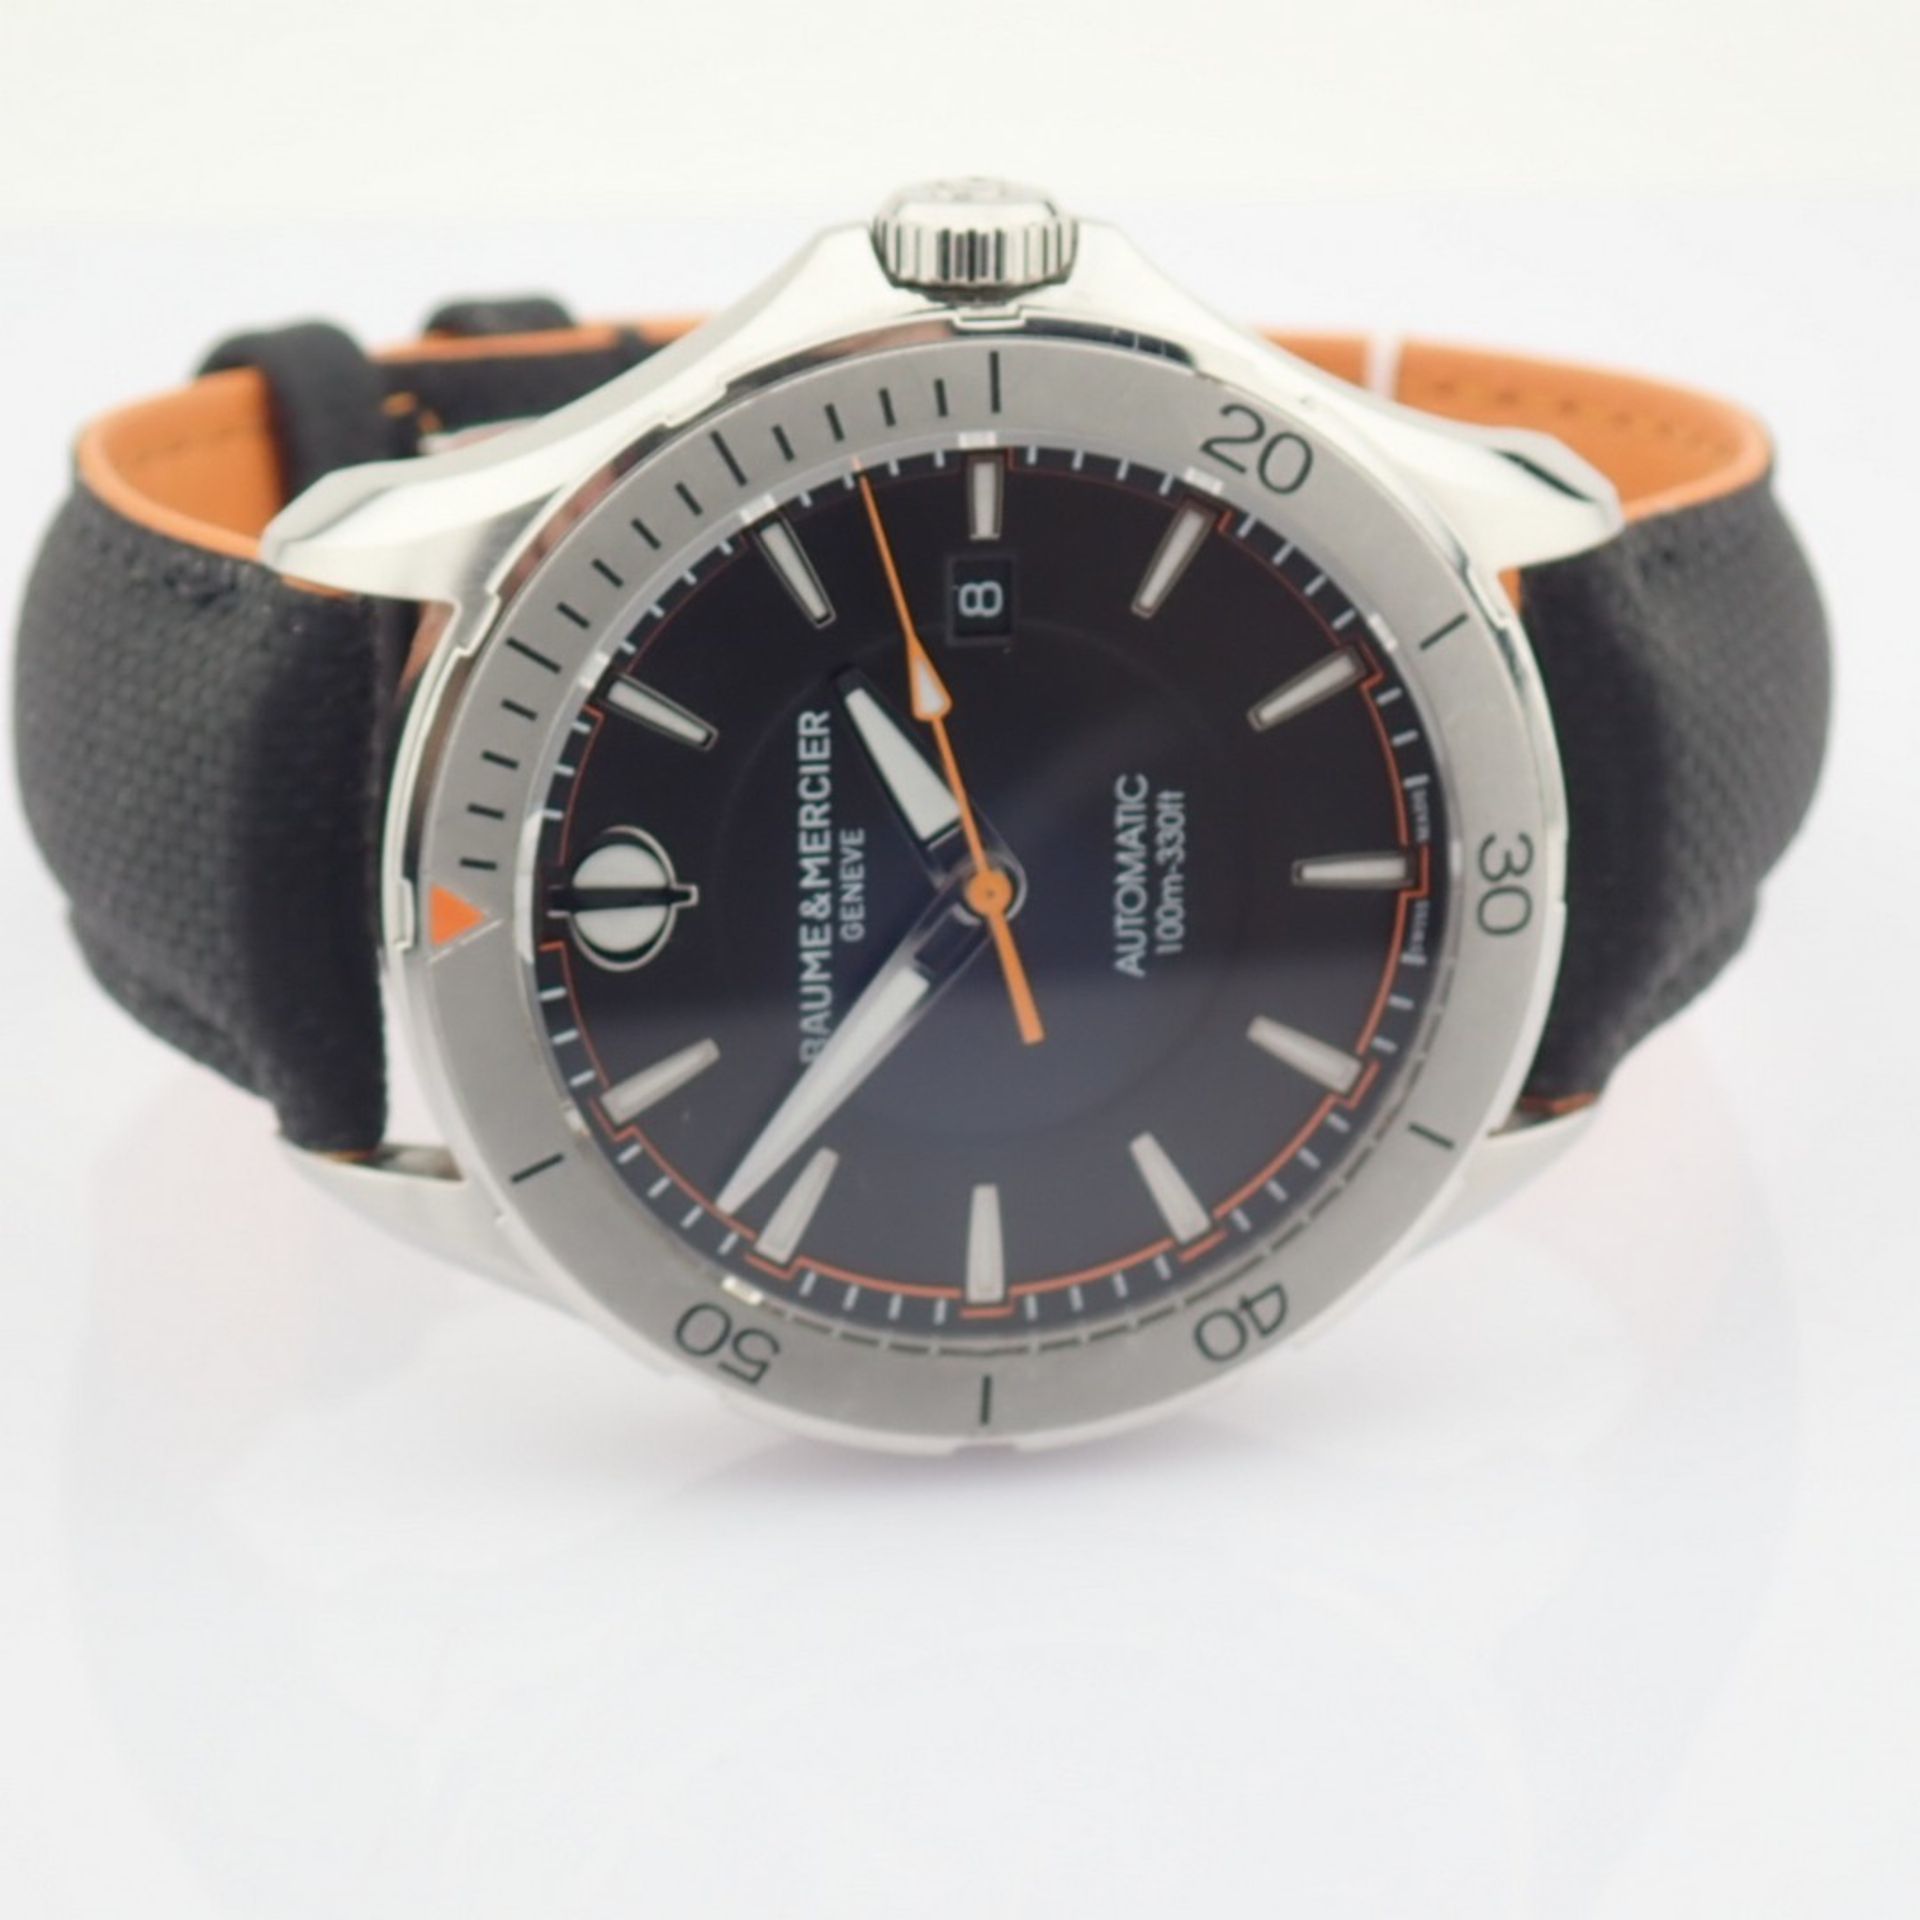 Baume & Mercier / Clifton Club - Gentlemen's Steel Wrist Watch - Image 12 of 15